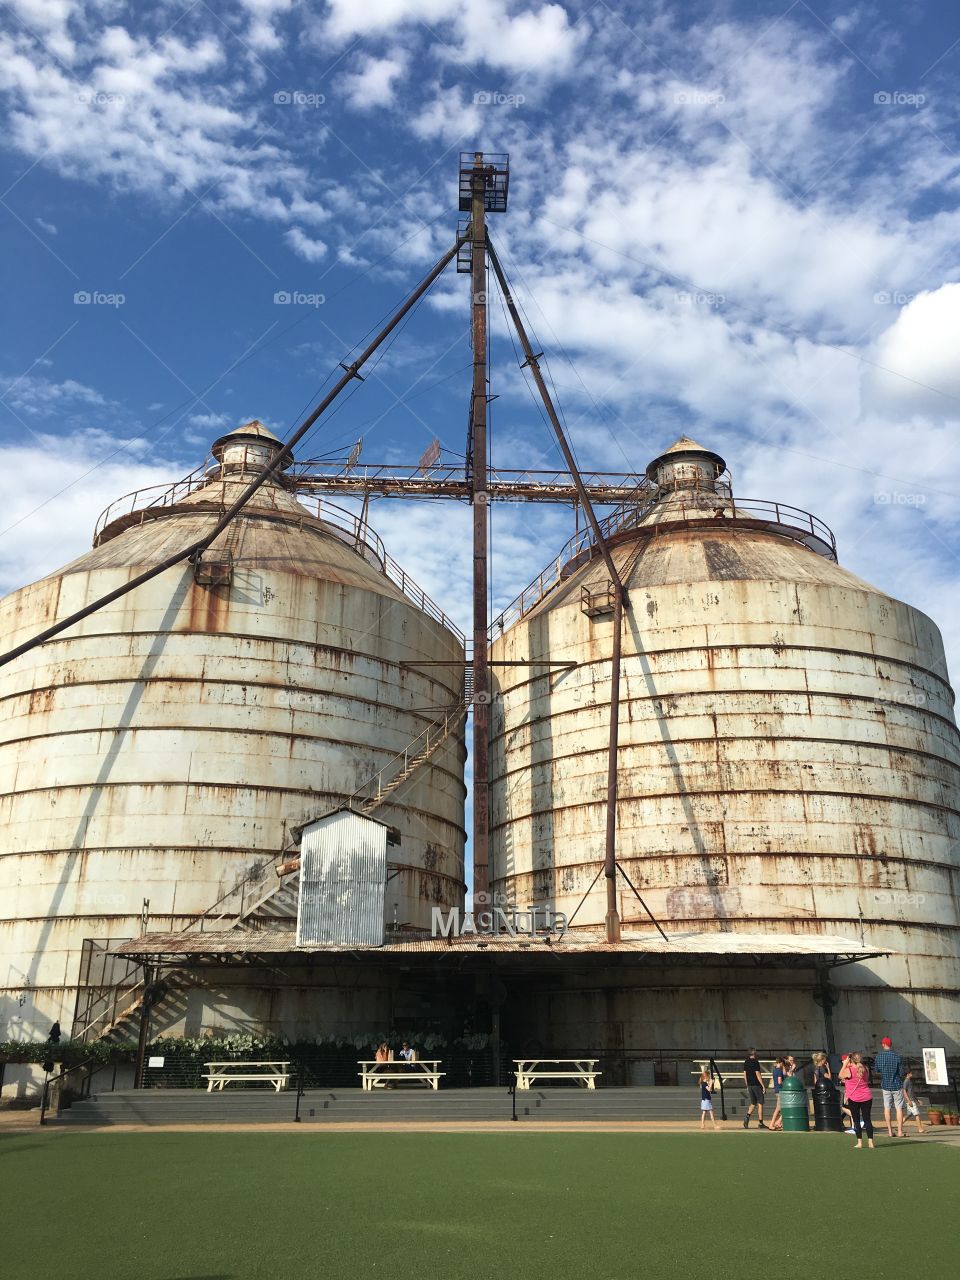 The silos 